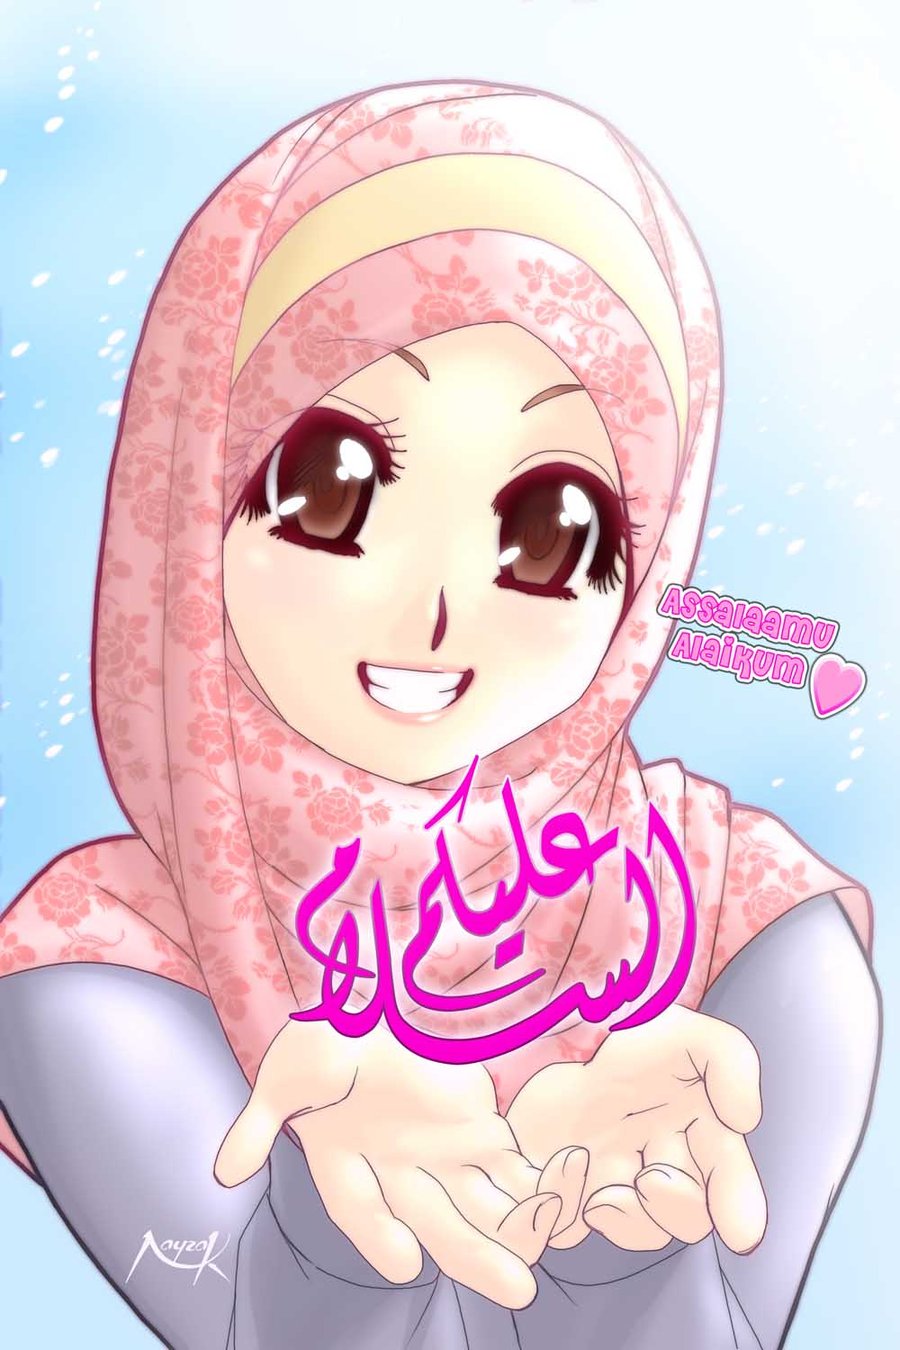 Kumpulan Gambar Kartun Muslimah Berhijab Design Kartun